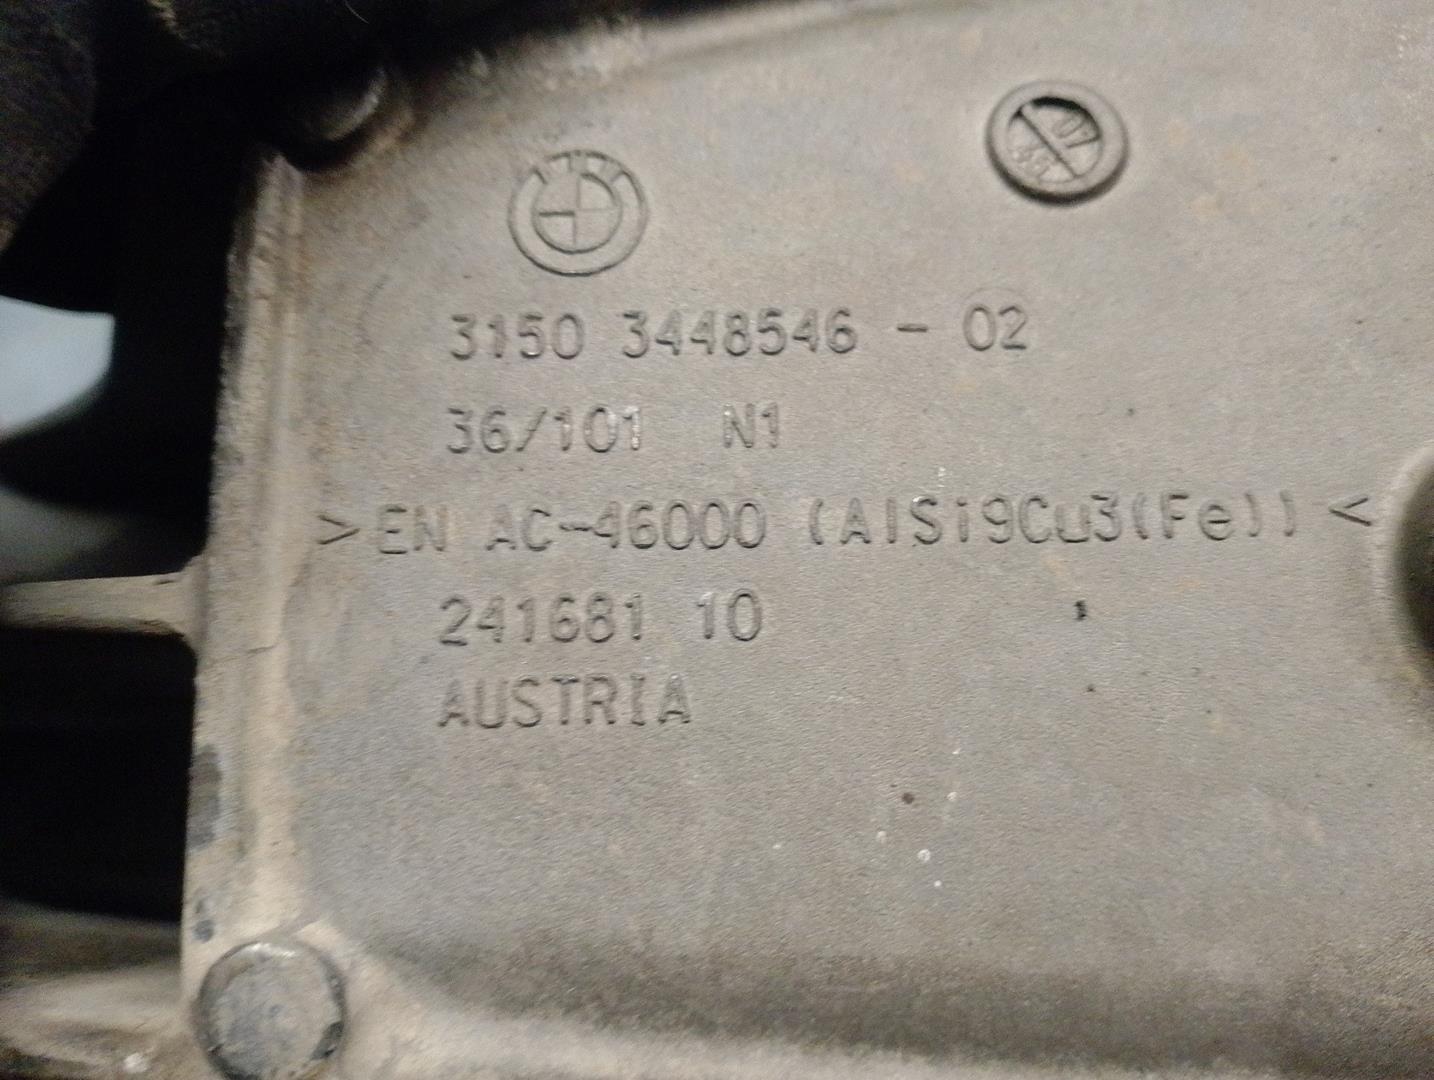 BMW X3 E83 (2003-2010) Other suspension parts 3150344854602, 24168110 24212674